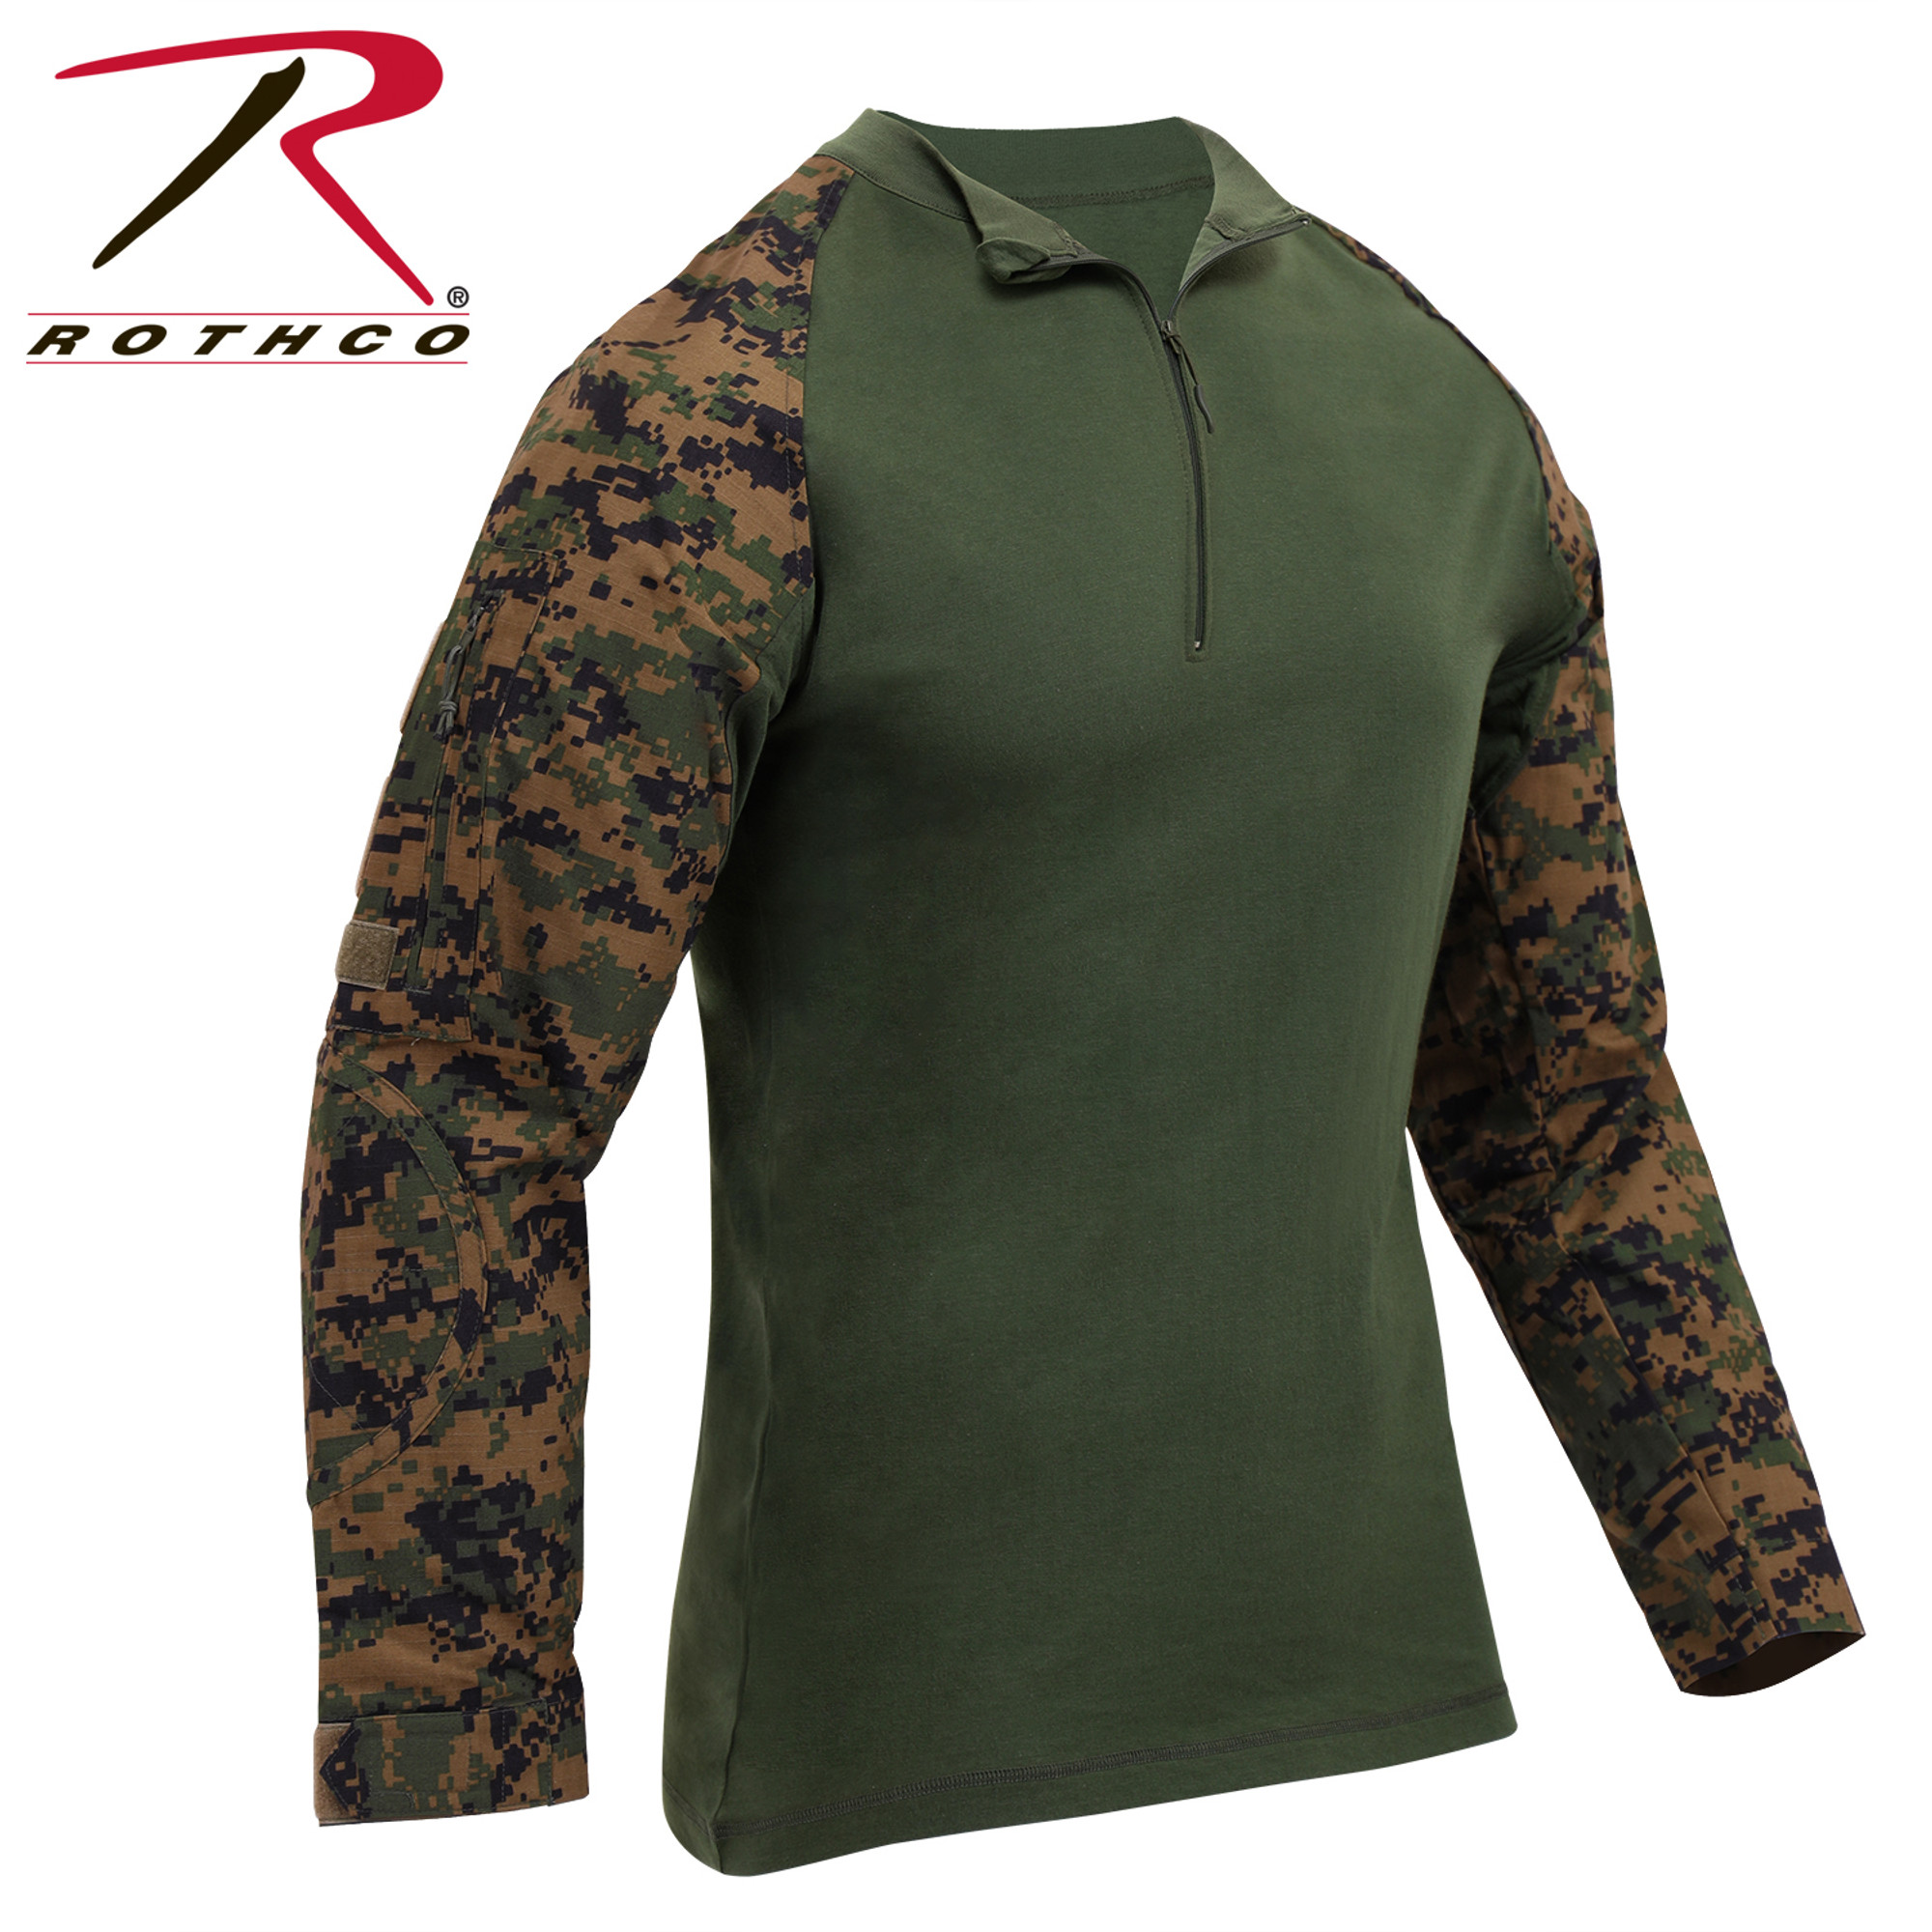 Rothco 1/4 Zip Tactical Airsoft Combat Shirt - Woodland Digital Camo